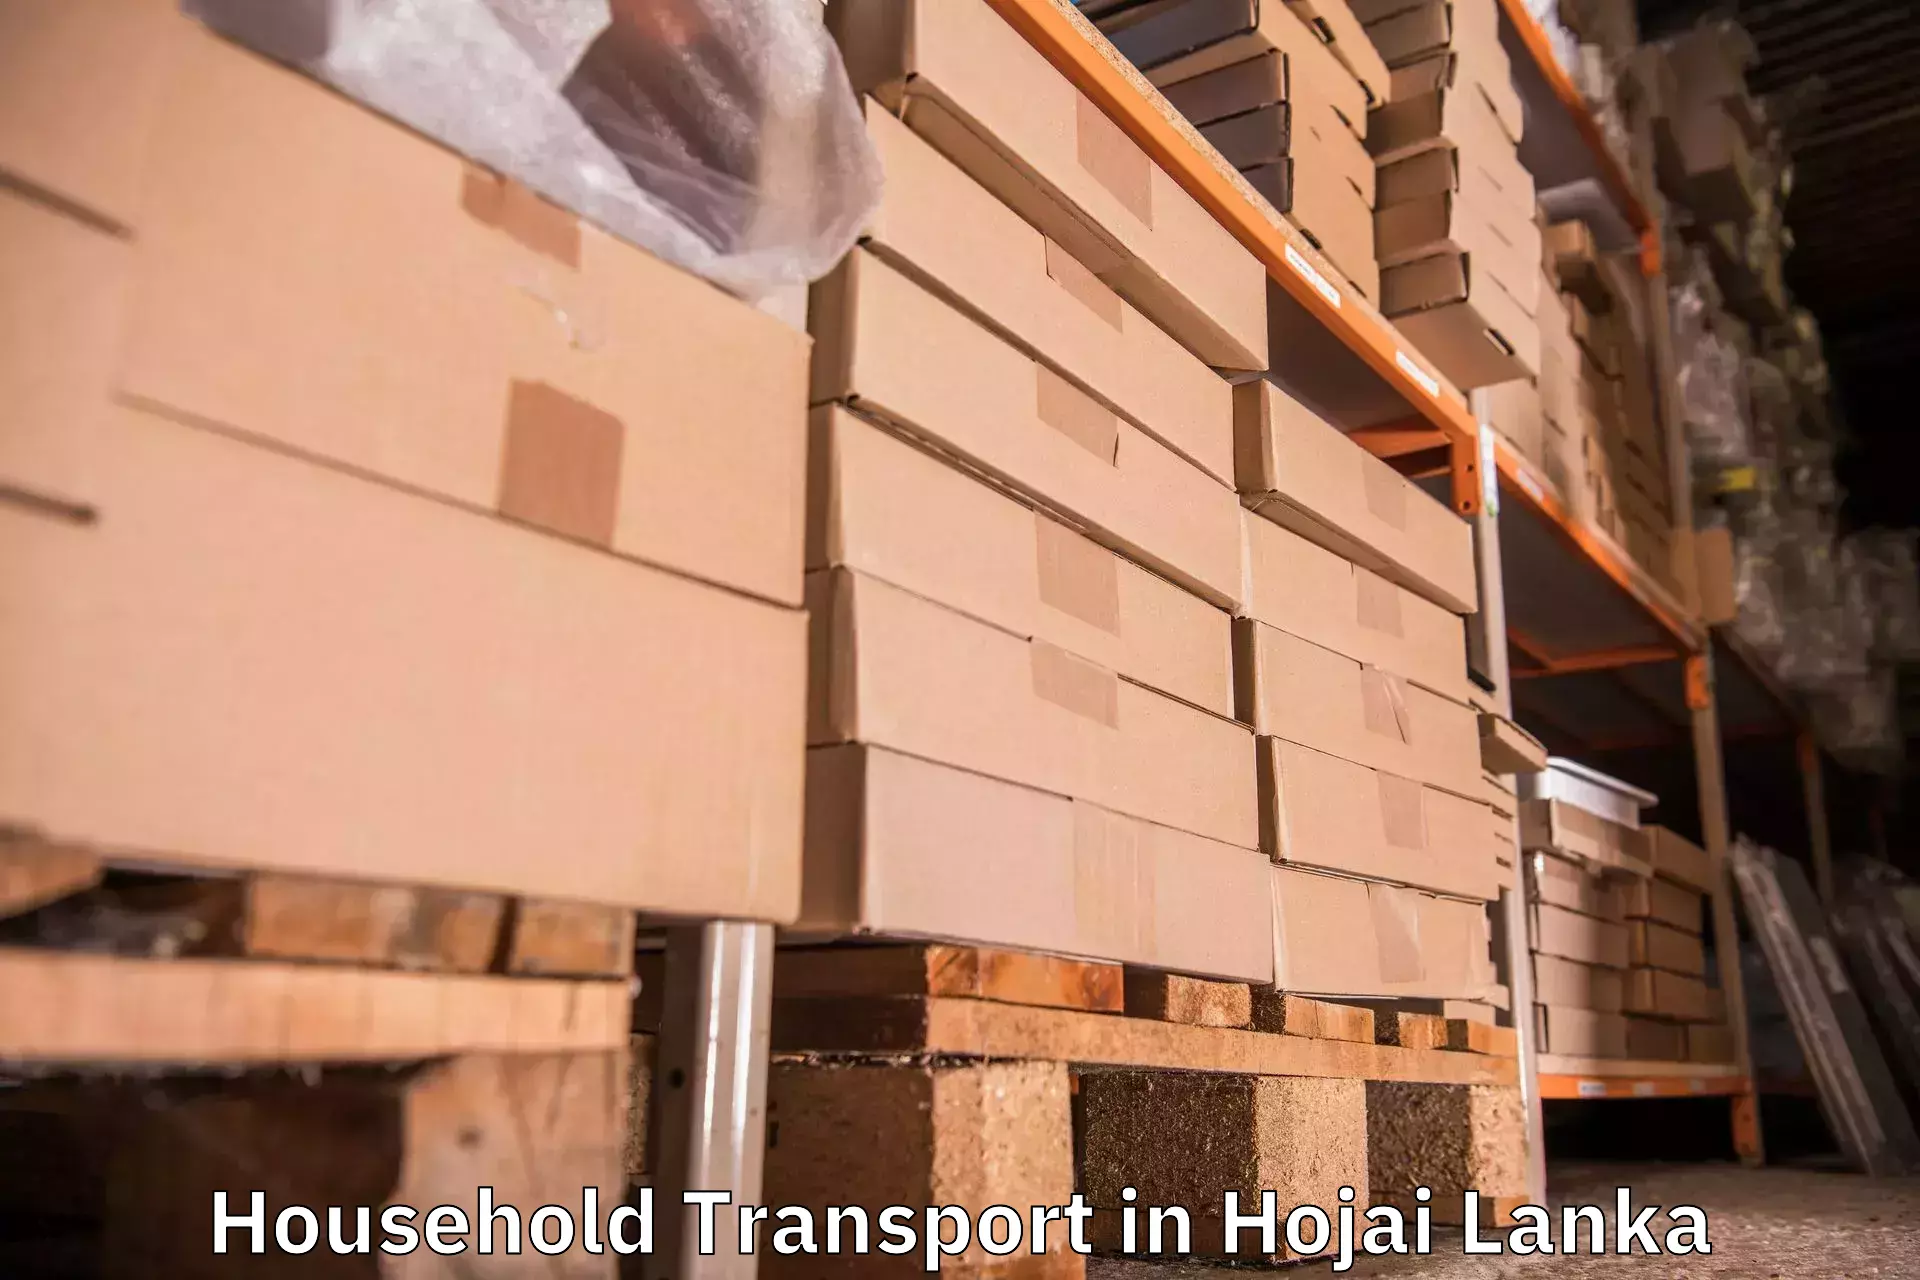 Furniture transport and storage in Hojai Lanka